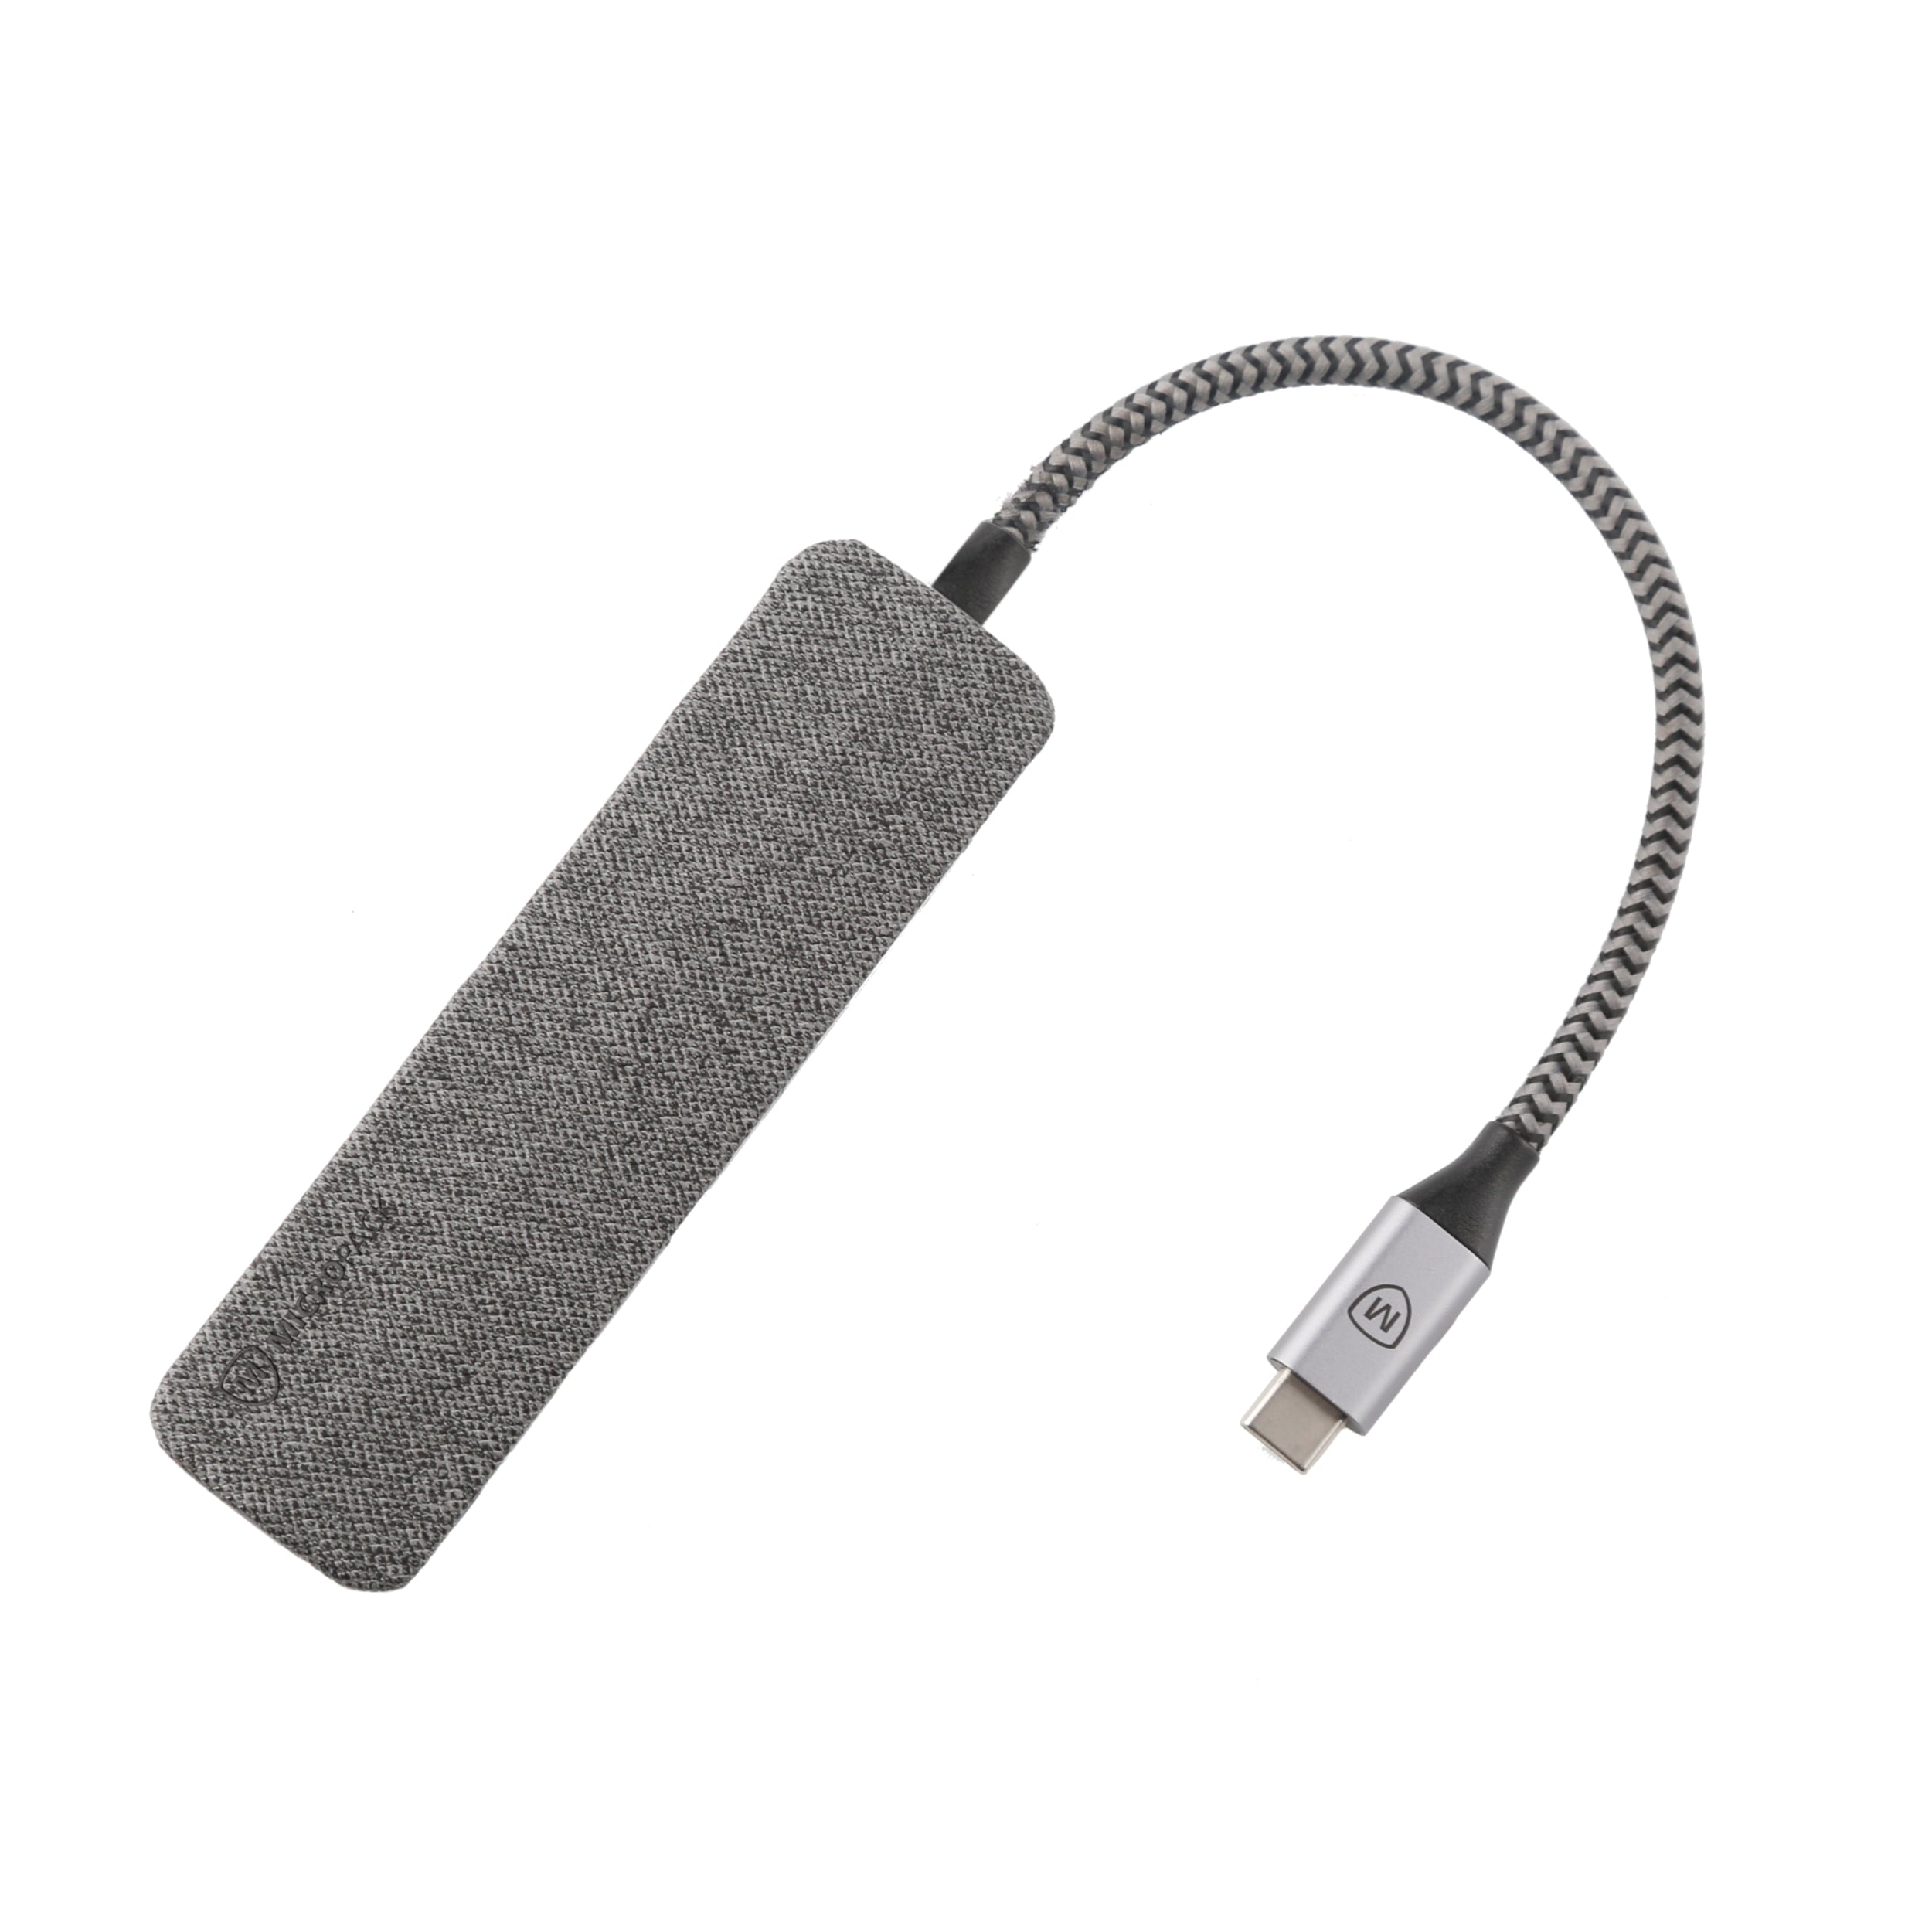 Supply USB C Digital AV Multiport Adapter Wholesale USB-C to 6-Ports HUB MICROPACK MDC-6